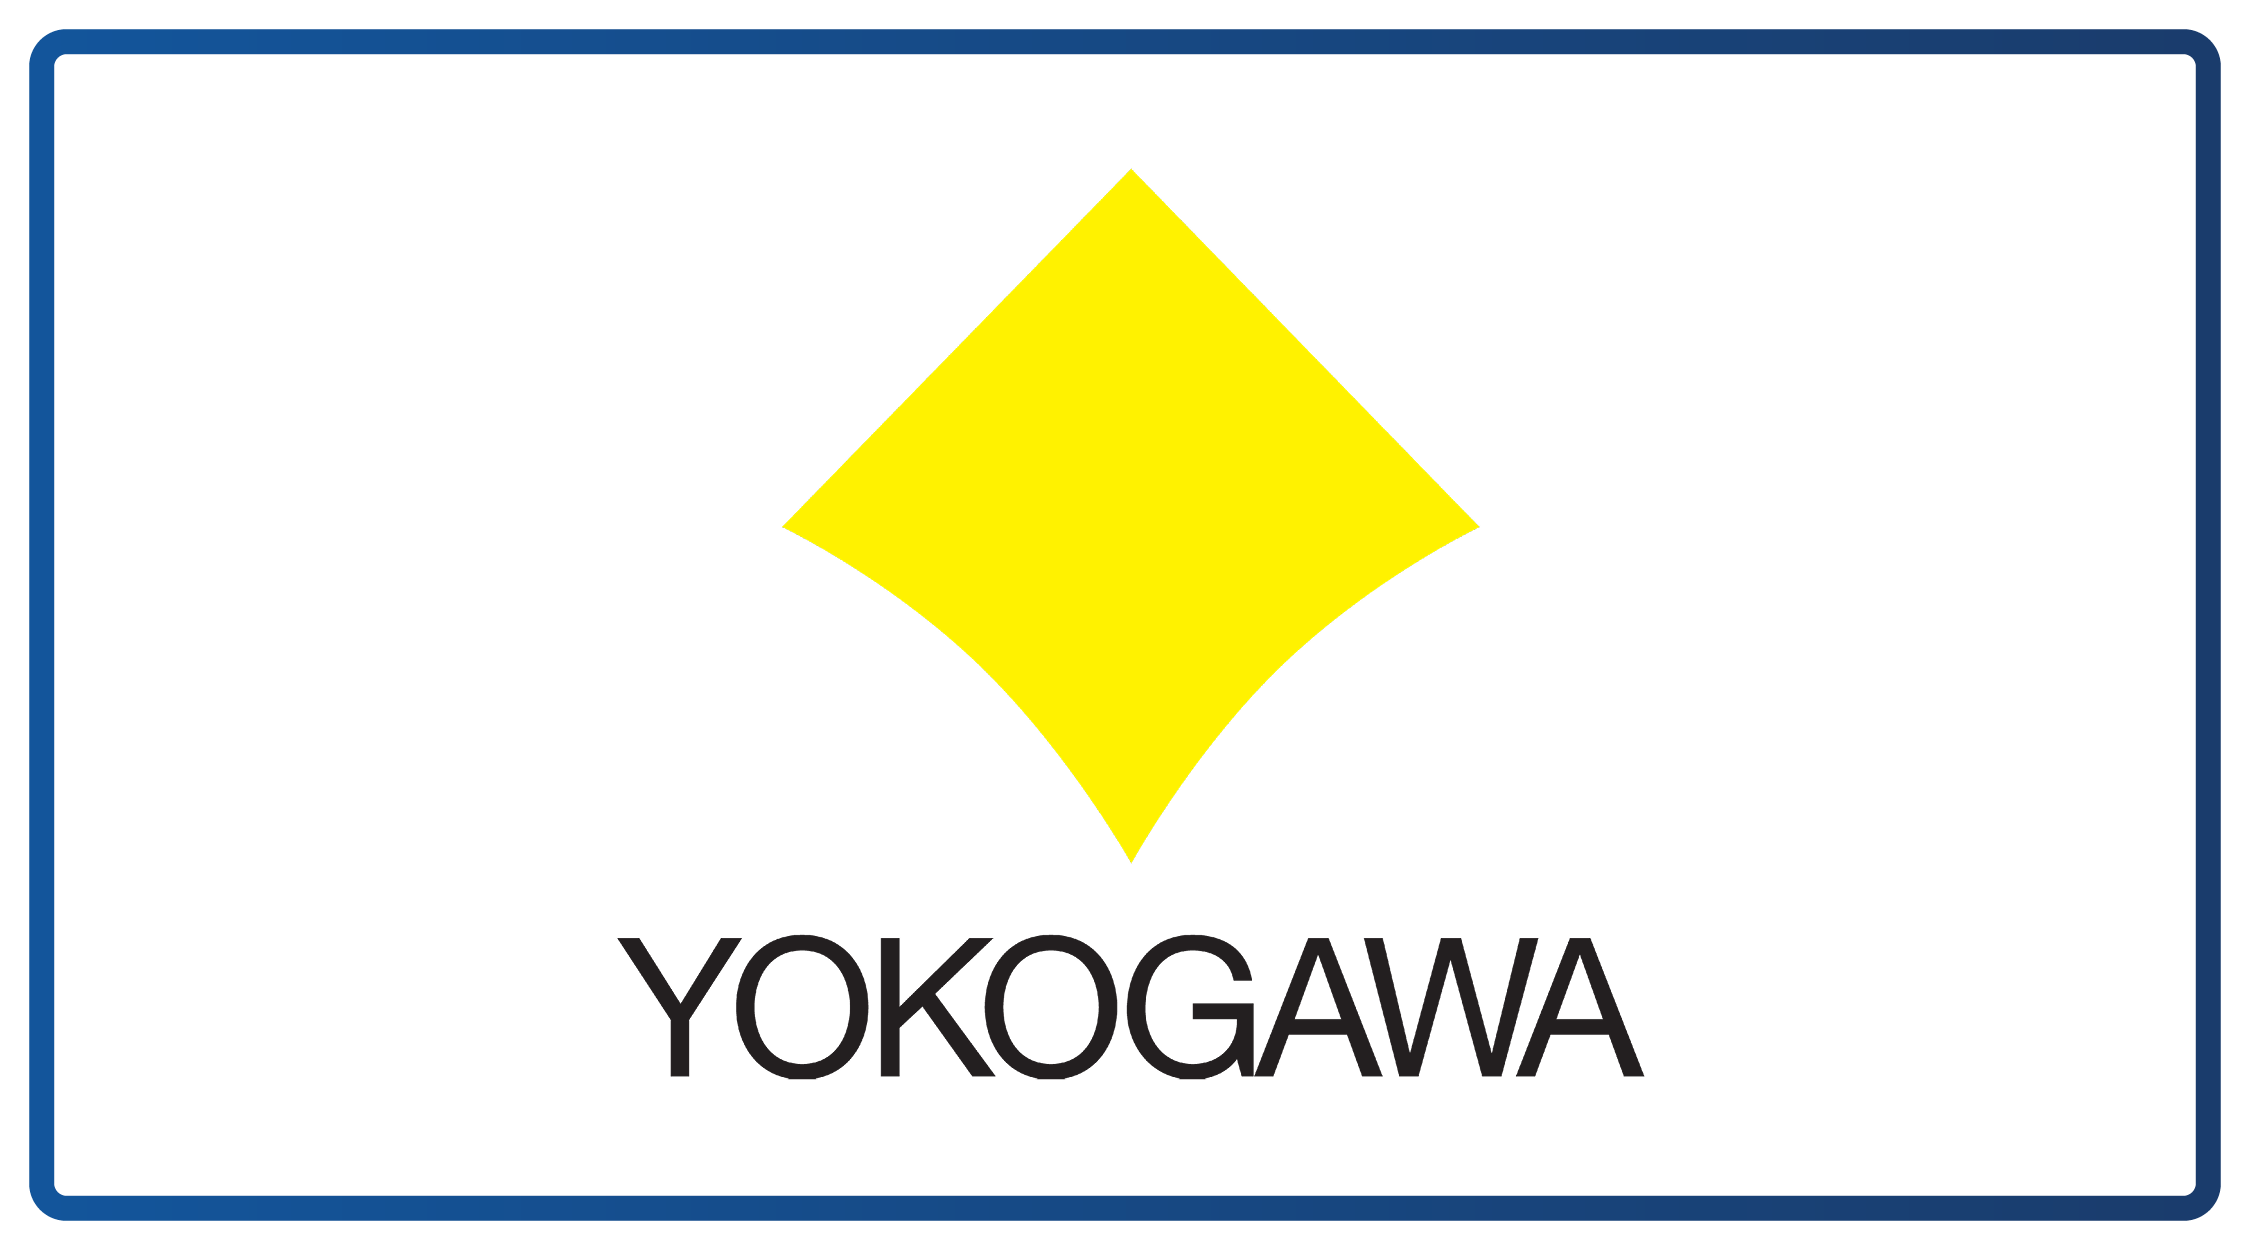 BTF24 Sponsor - YOKOGAWA